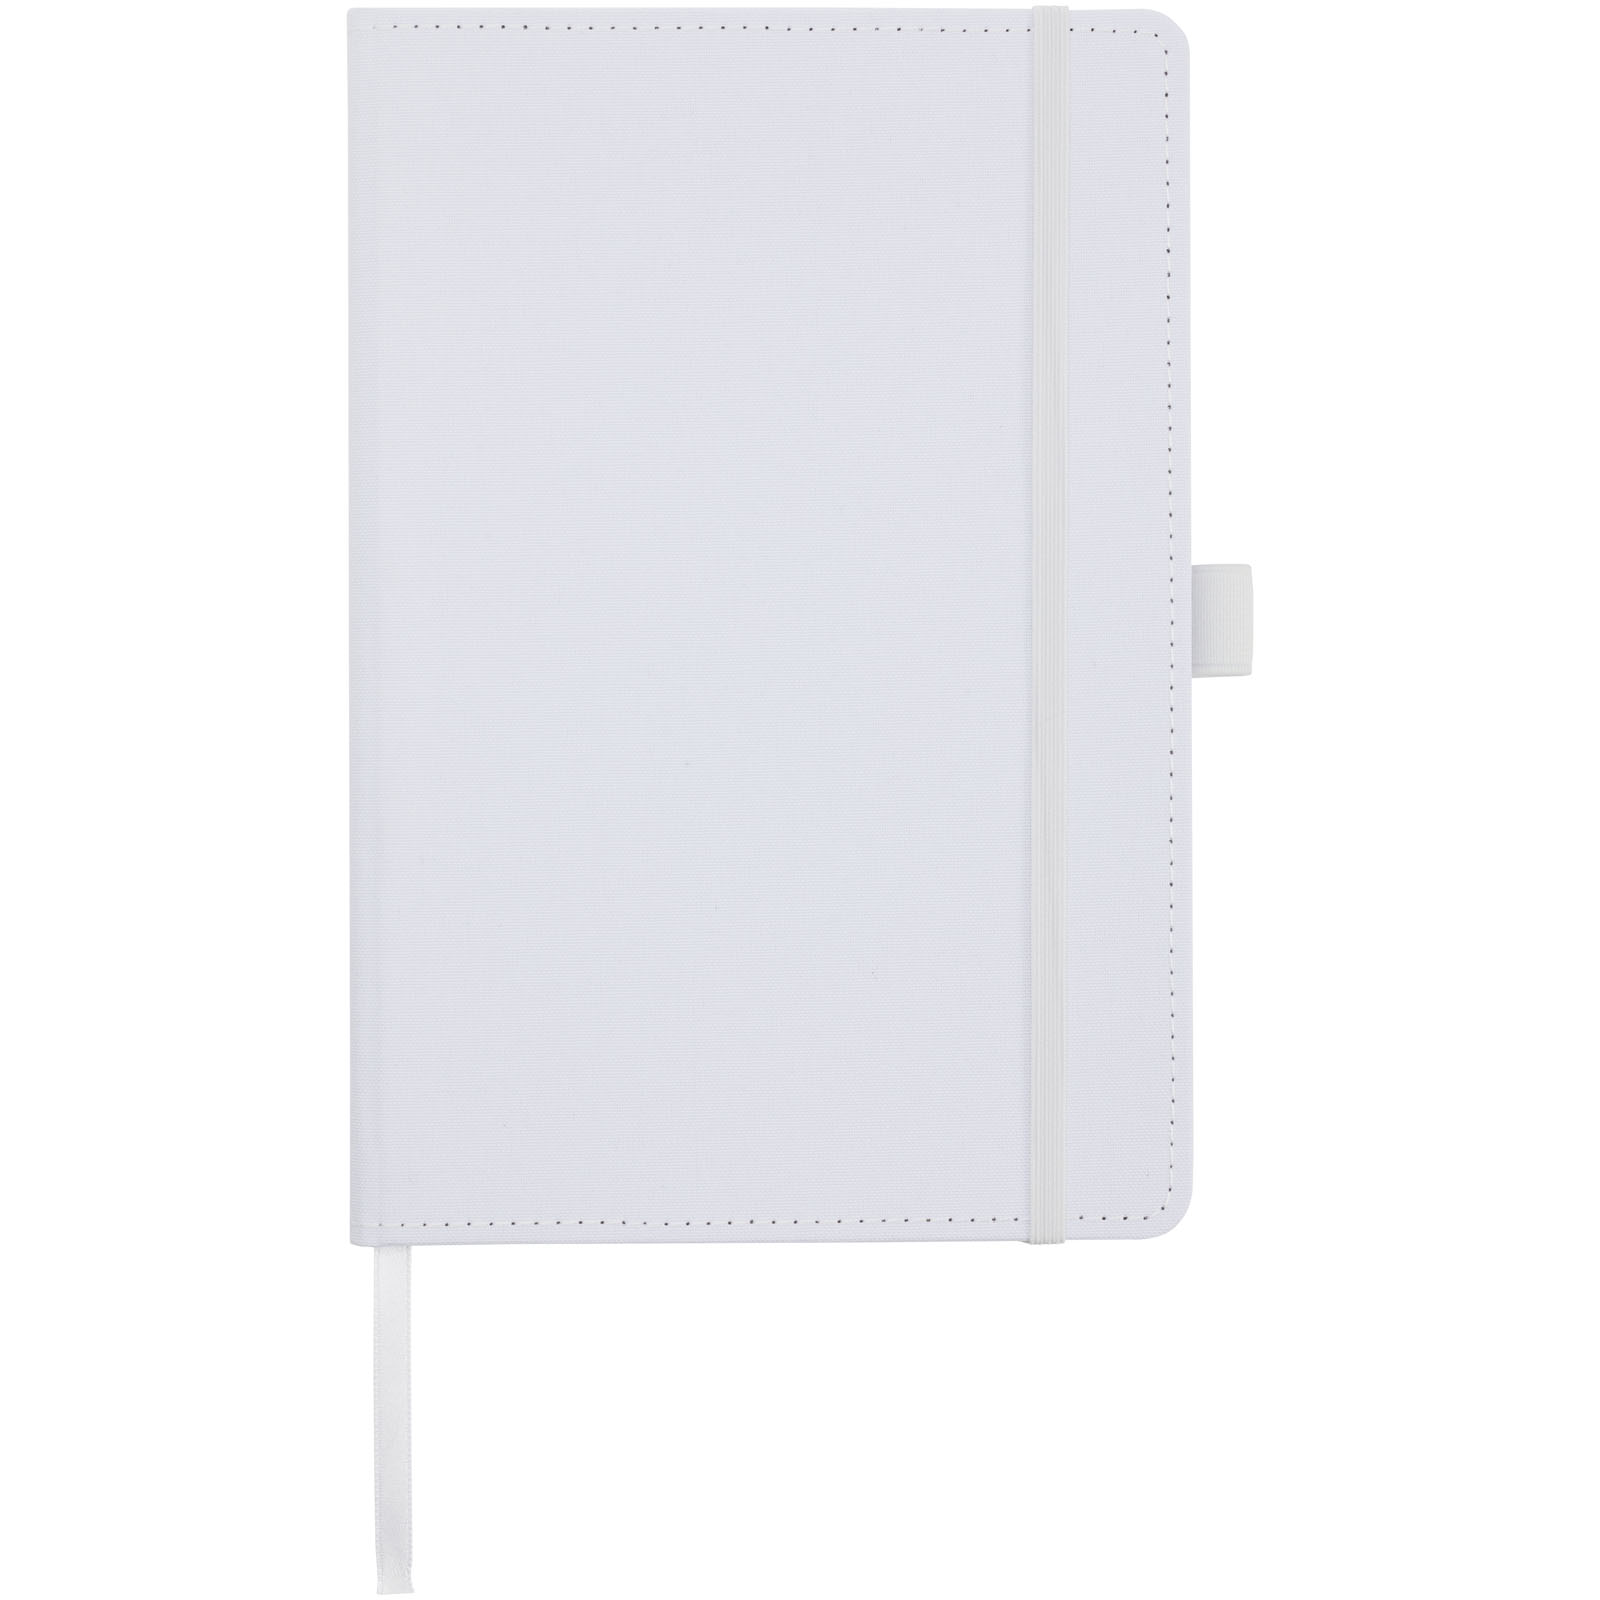 Advertising Hard cover notebooks - Thalaasa ocean-bound plastic hardcover notebook - 1